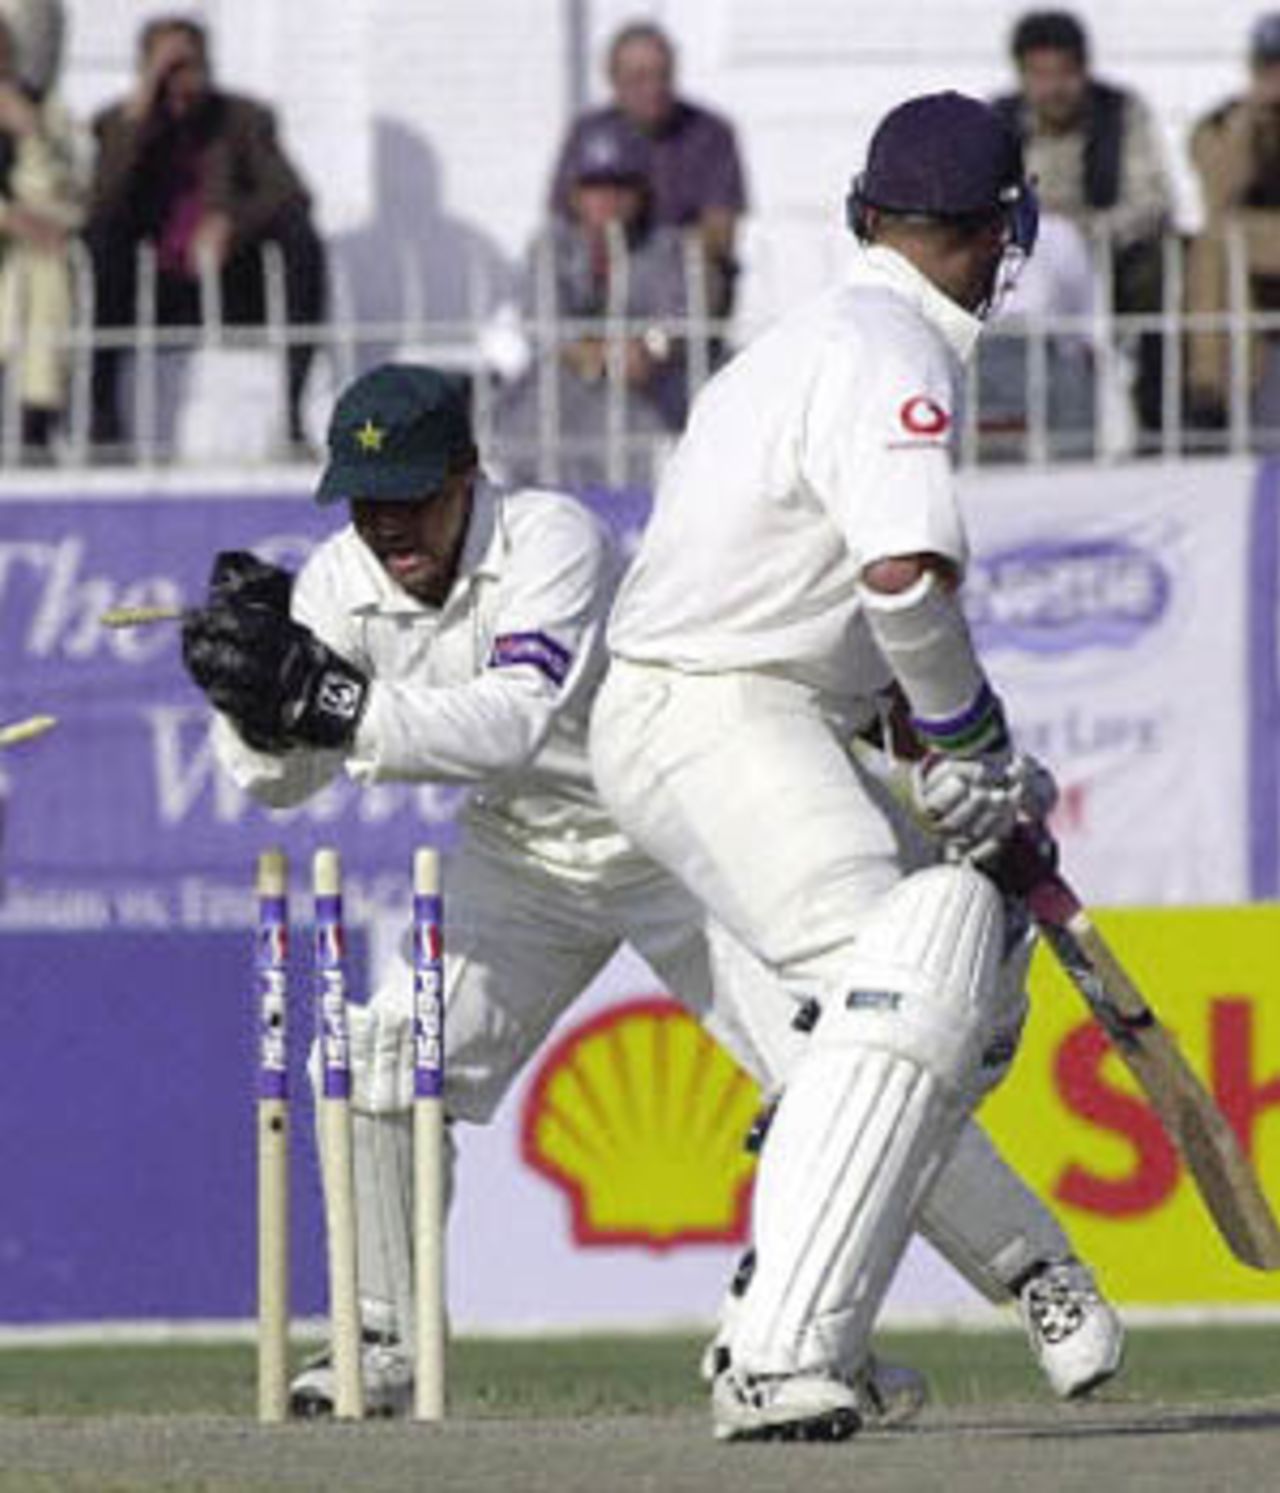 Marcus Trescothick looks back to see Moin stump him off rookie Danish Kaneria, England in Pakistan, 2000/01, 2nd Test, Pakistan v England, Iqbal Stadium, Faisalabad, 29Nov-03Dec 2000 (Day 2).